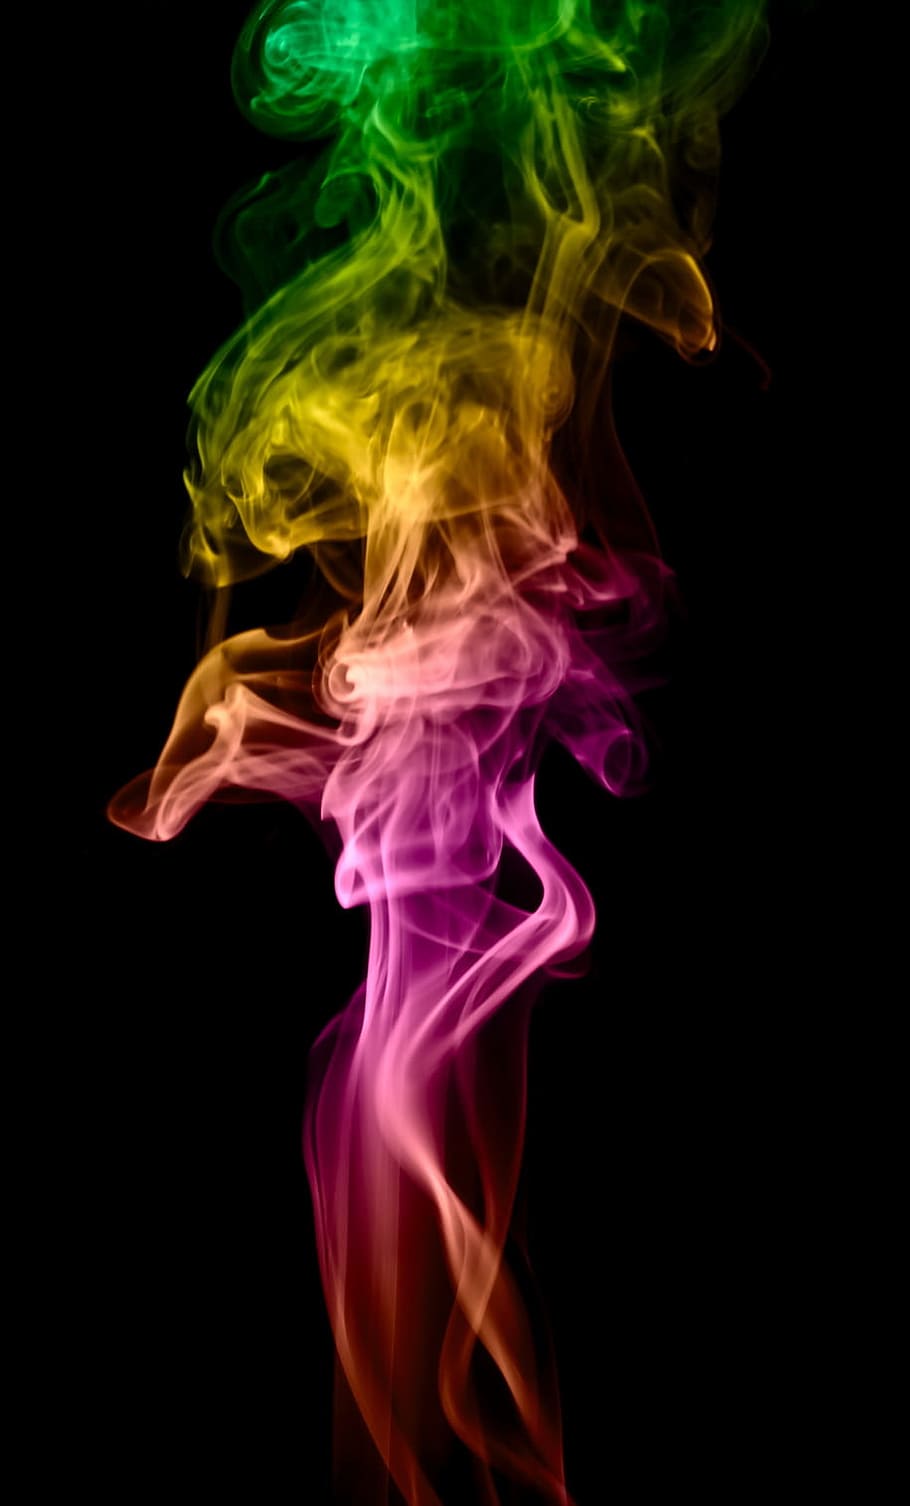 aromaterapia, fondo, color, olor, humo, fondo negro, foto de estudio, movimiento, interiores, humo - estructura física